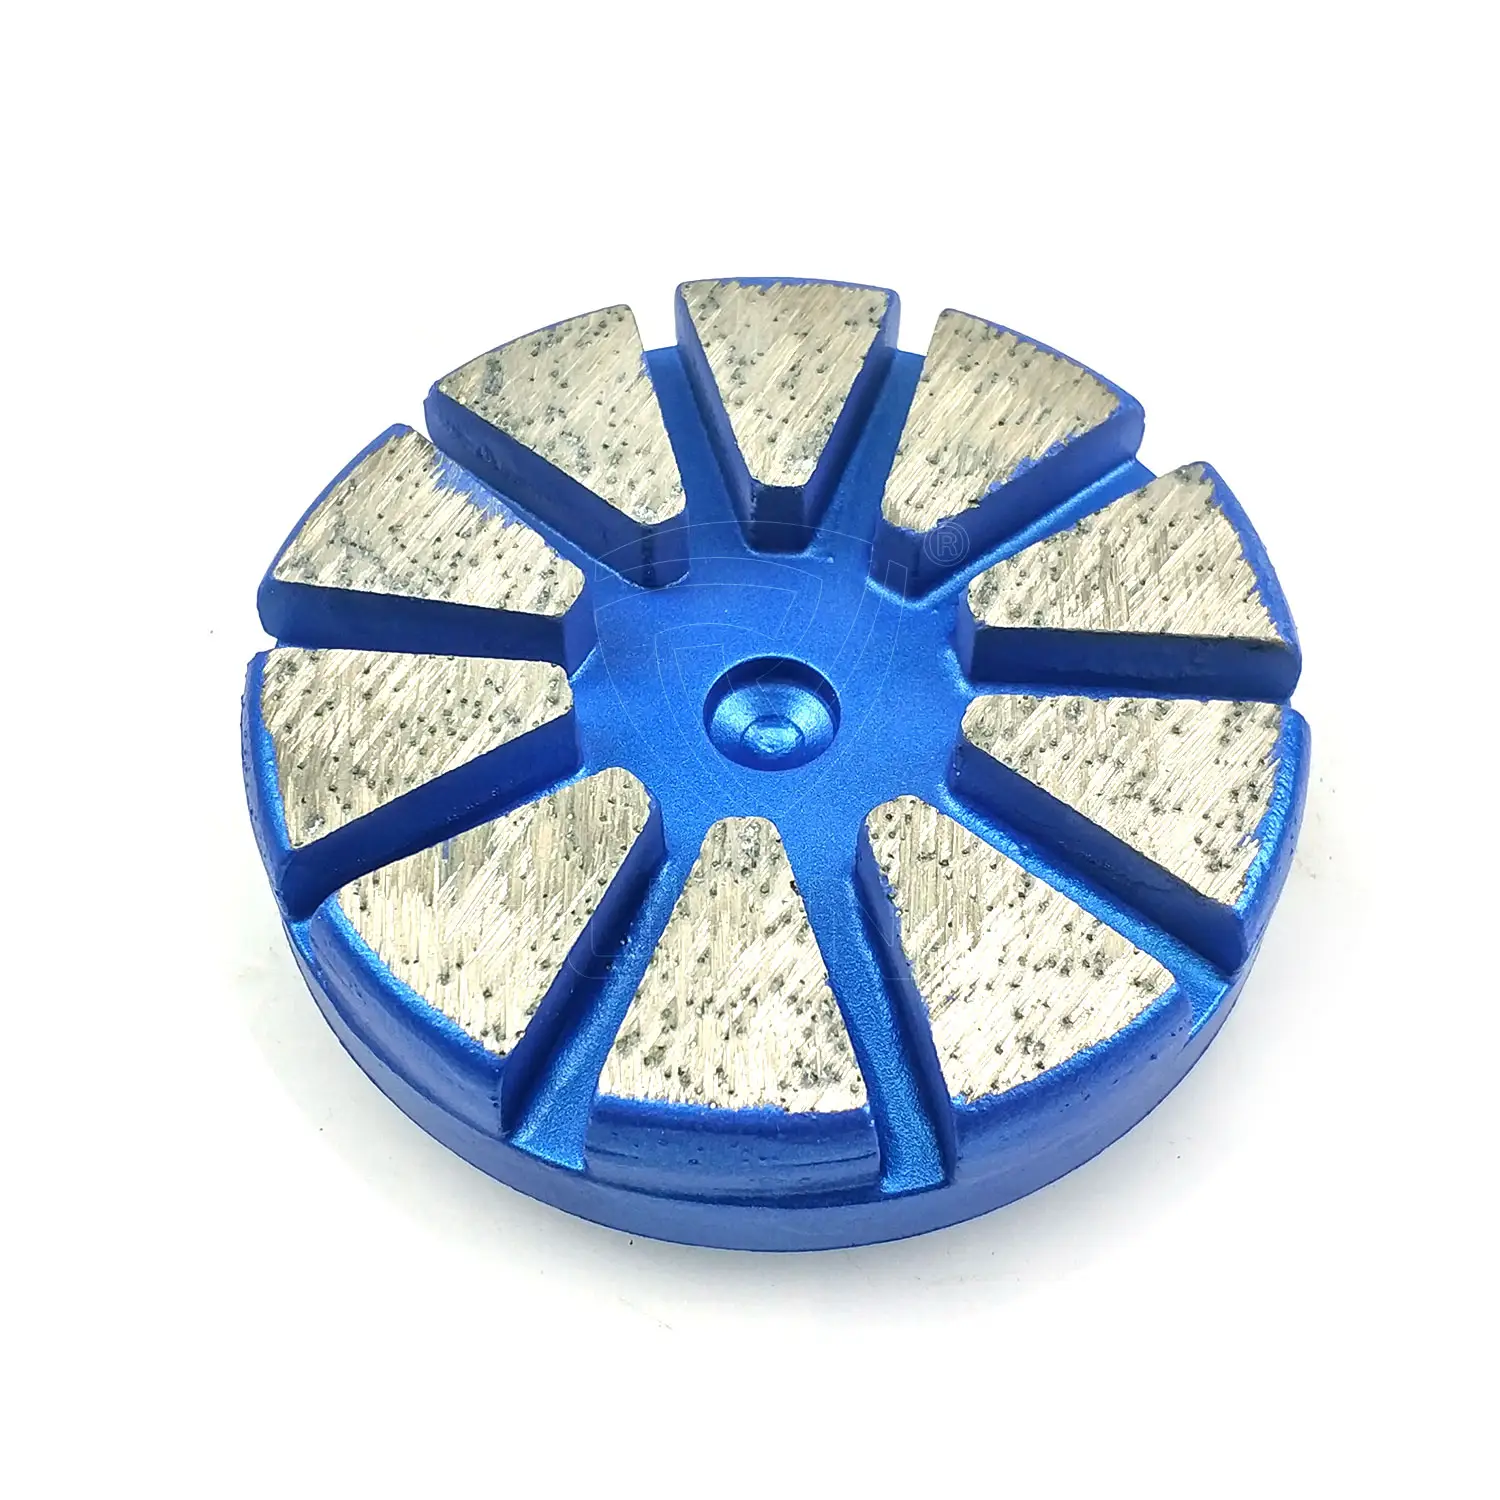 Factory Direct 3 inch Redi-lock Diamond Grinding Disc Wheel with 10 Segments